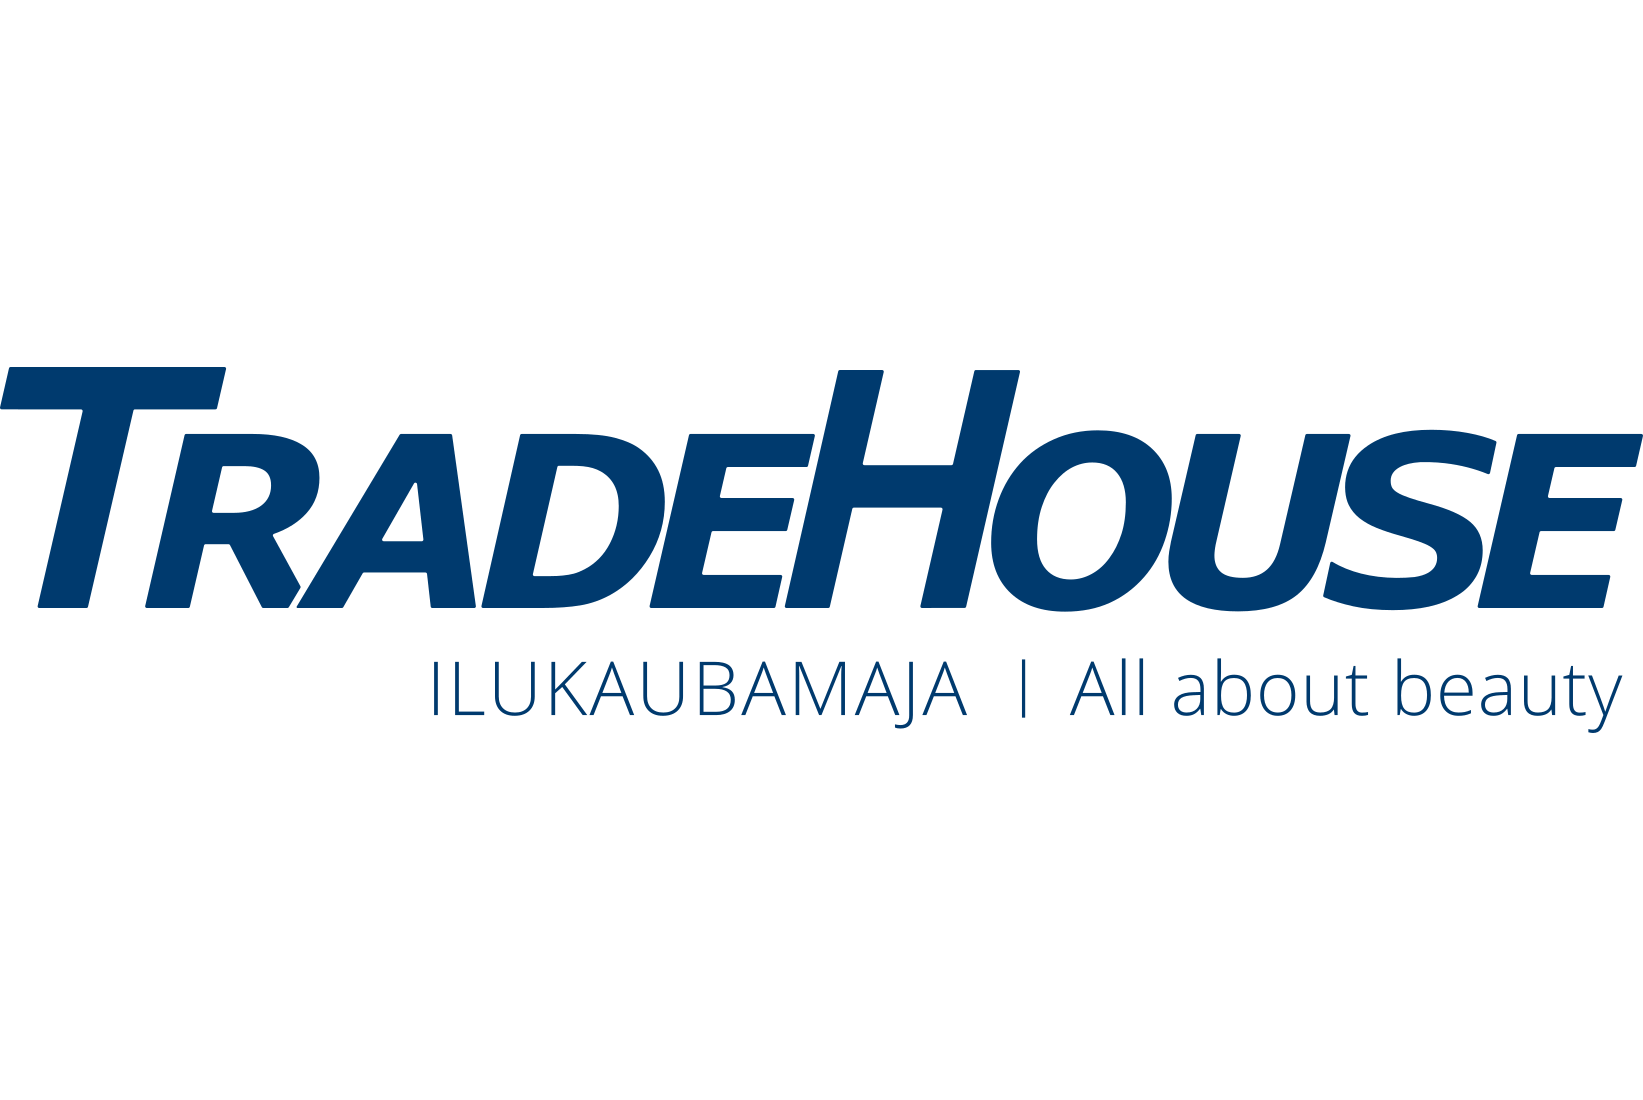 TradeHouse Ilukaubamaja